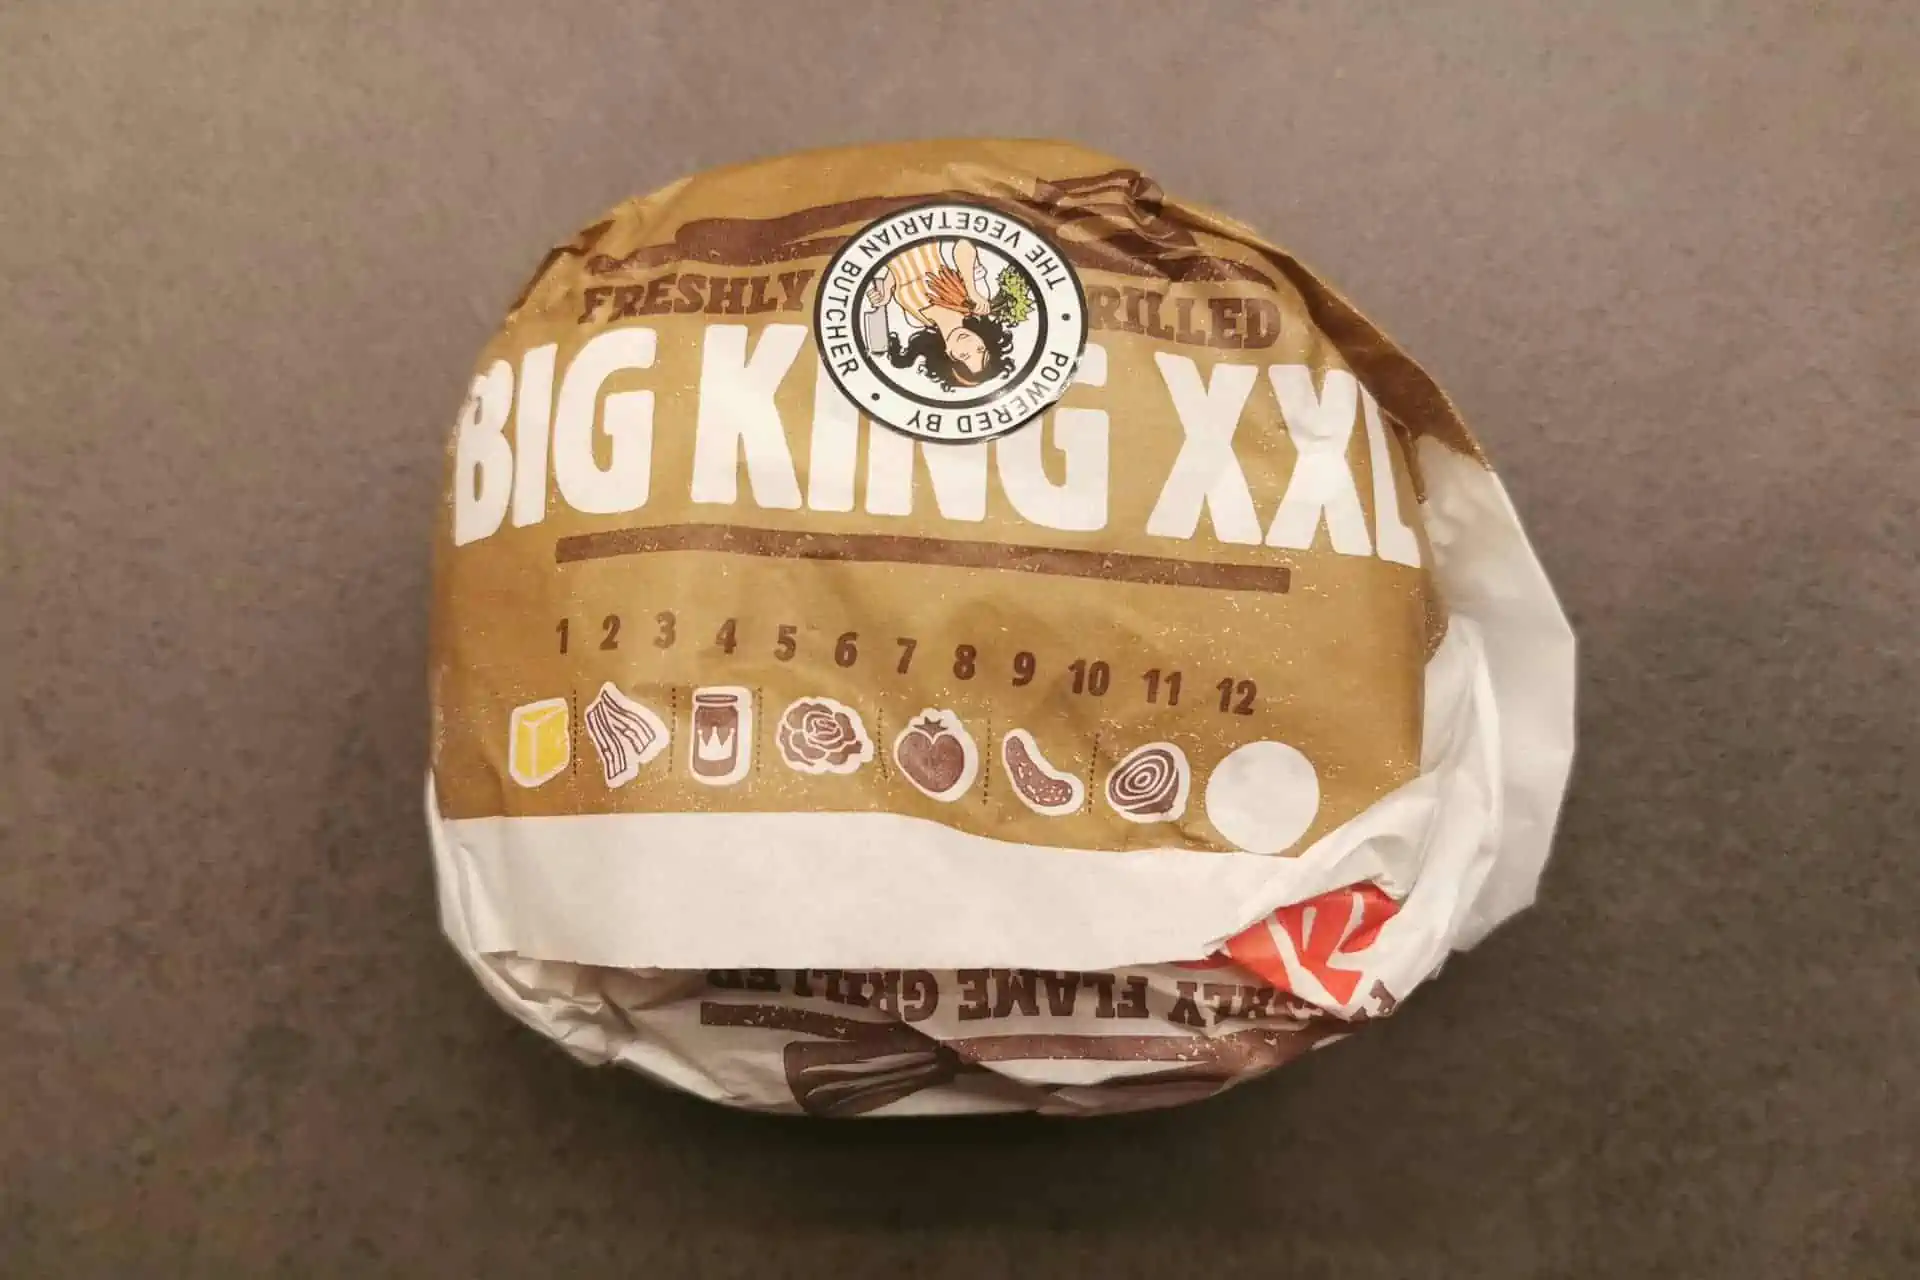 Burger King - Plant-based Big King XXL